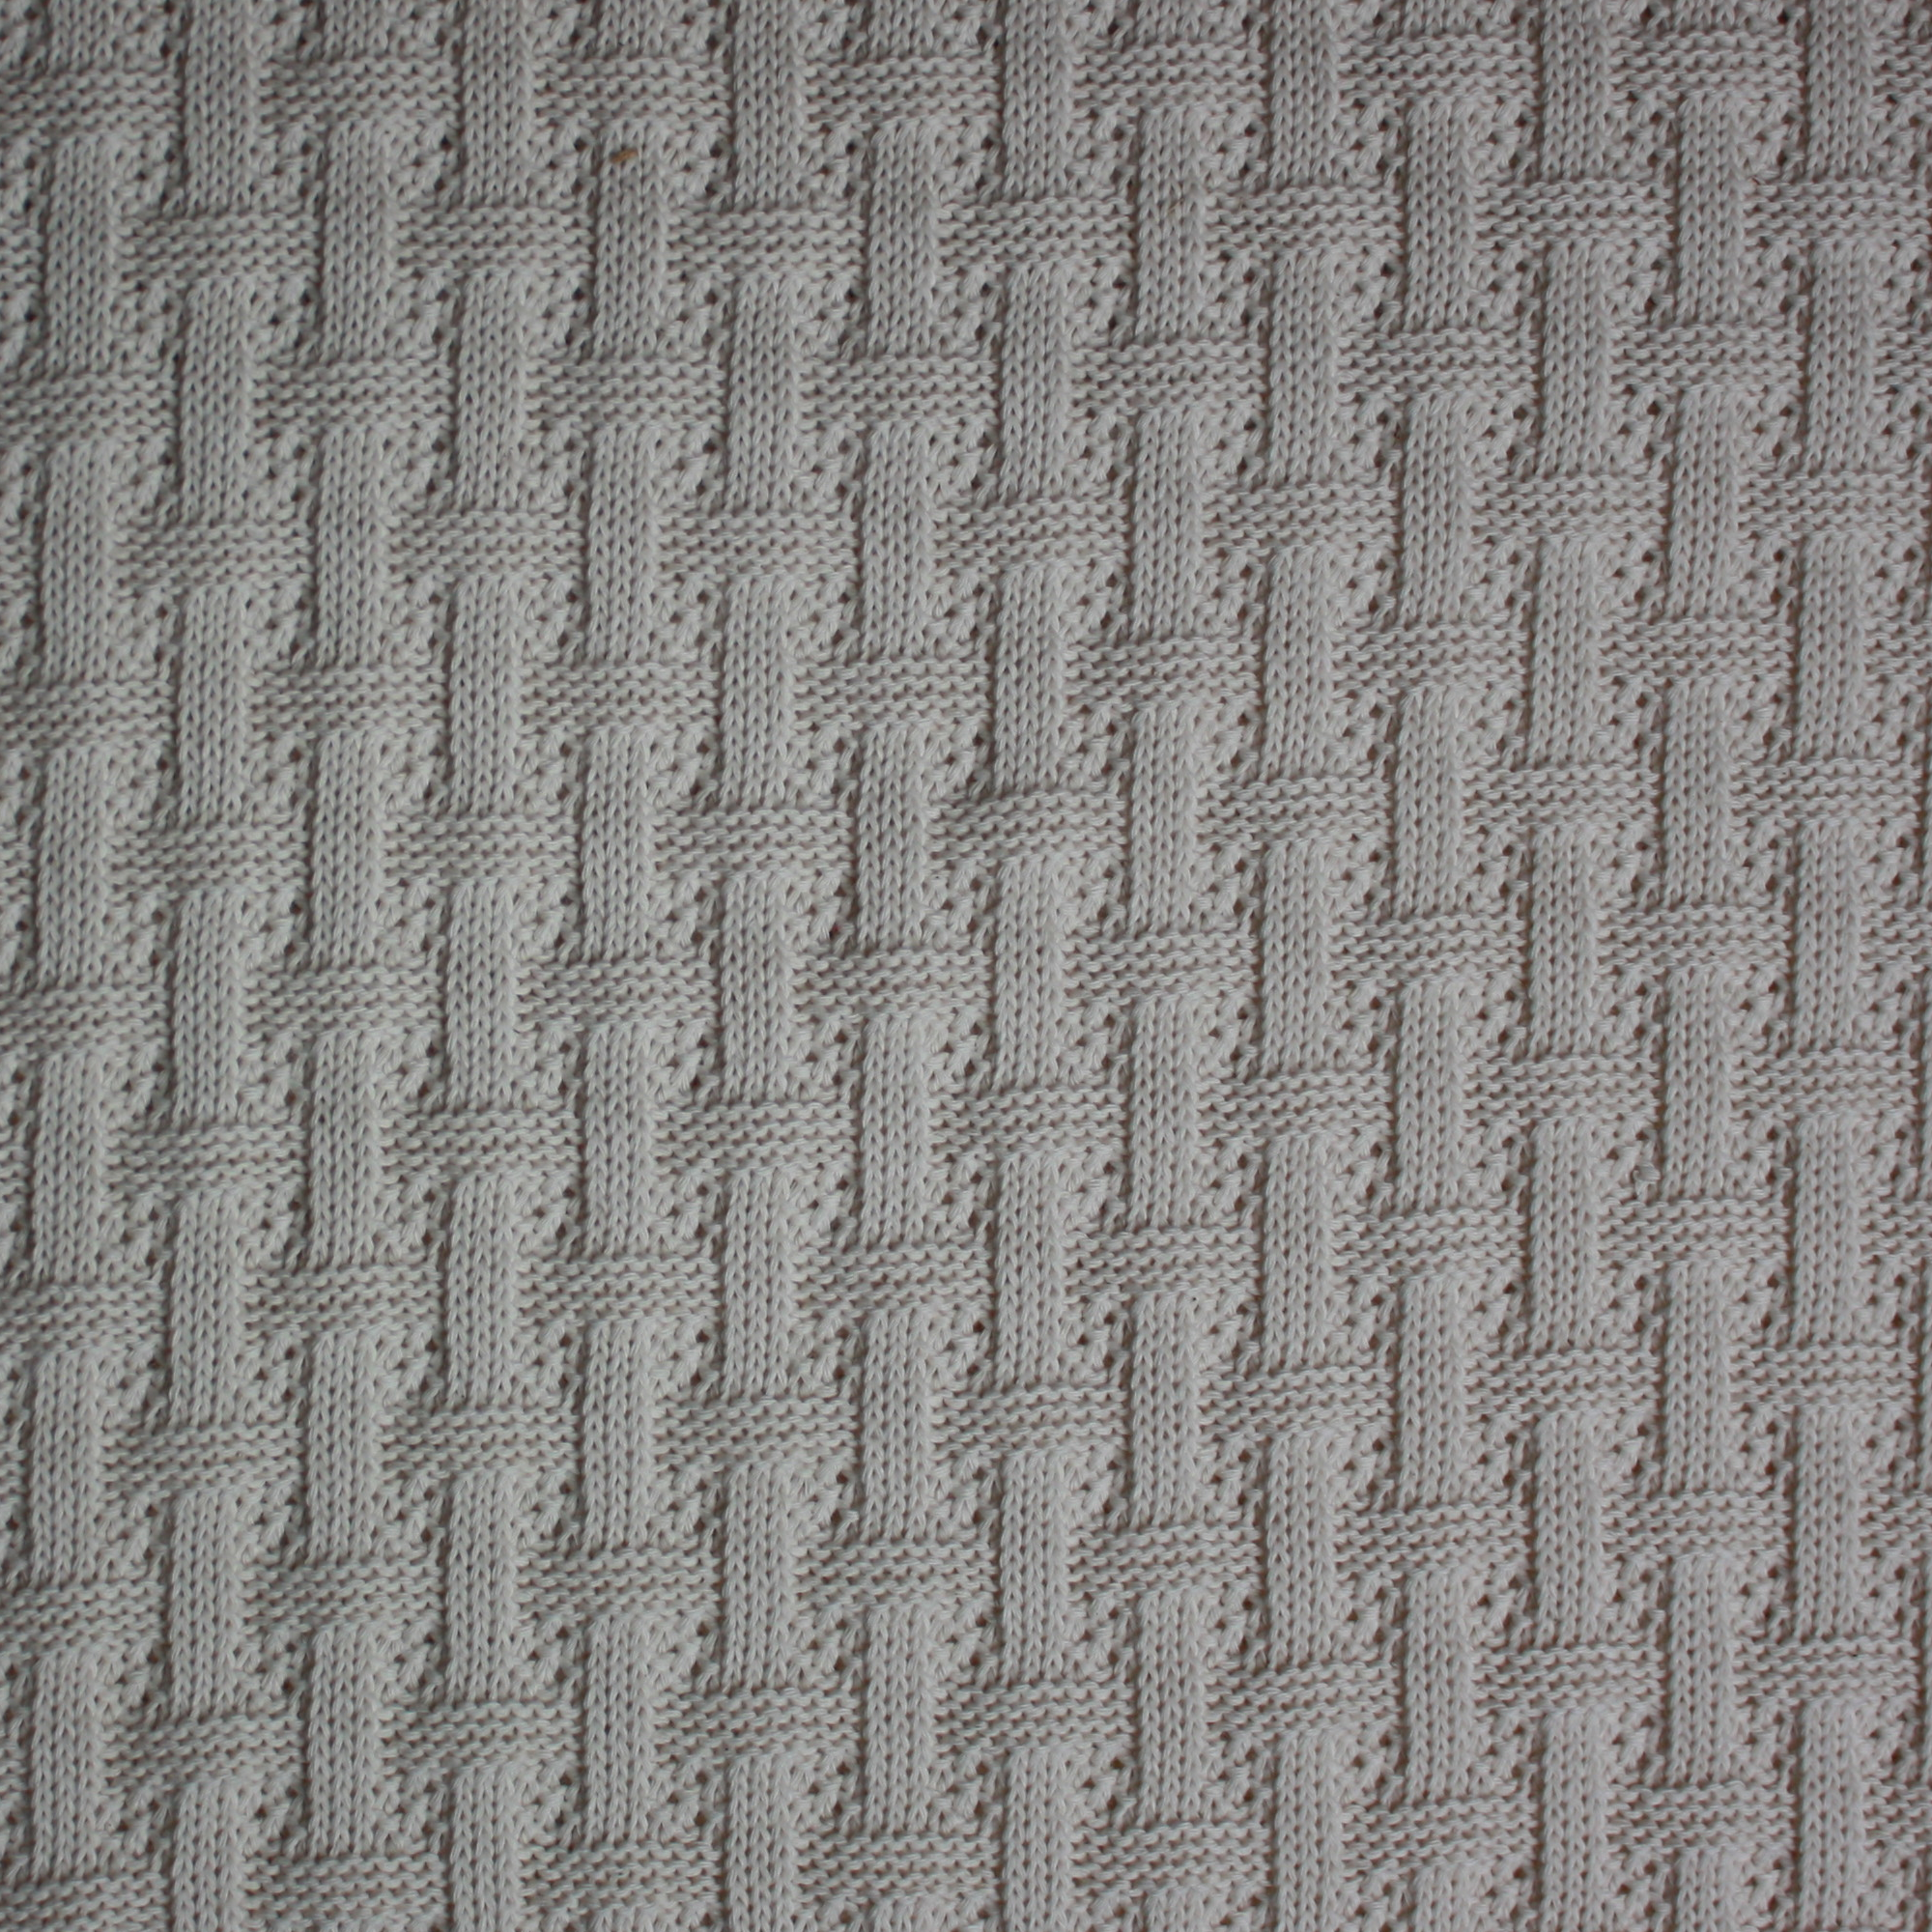 Albstoffe Sweet Home Grobstrick Woven Knitty meringa  - Preis pro 0,5 m 